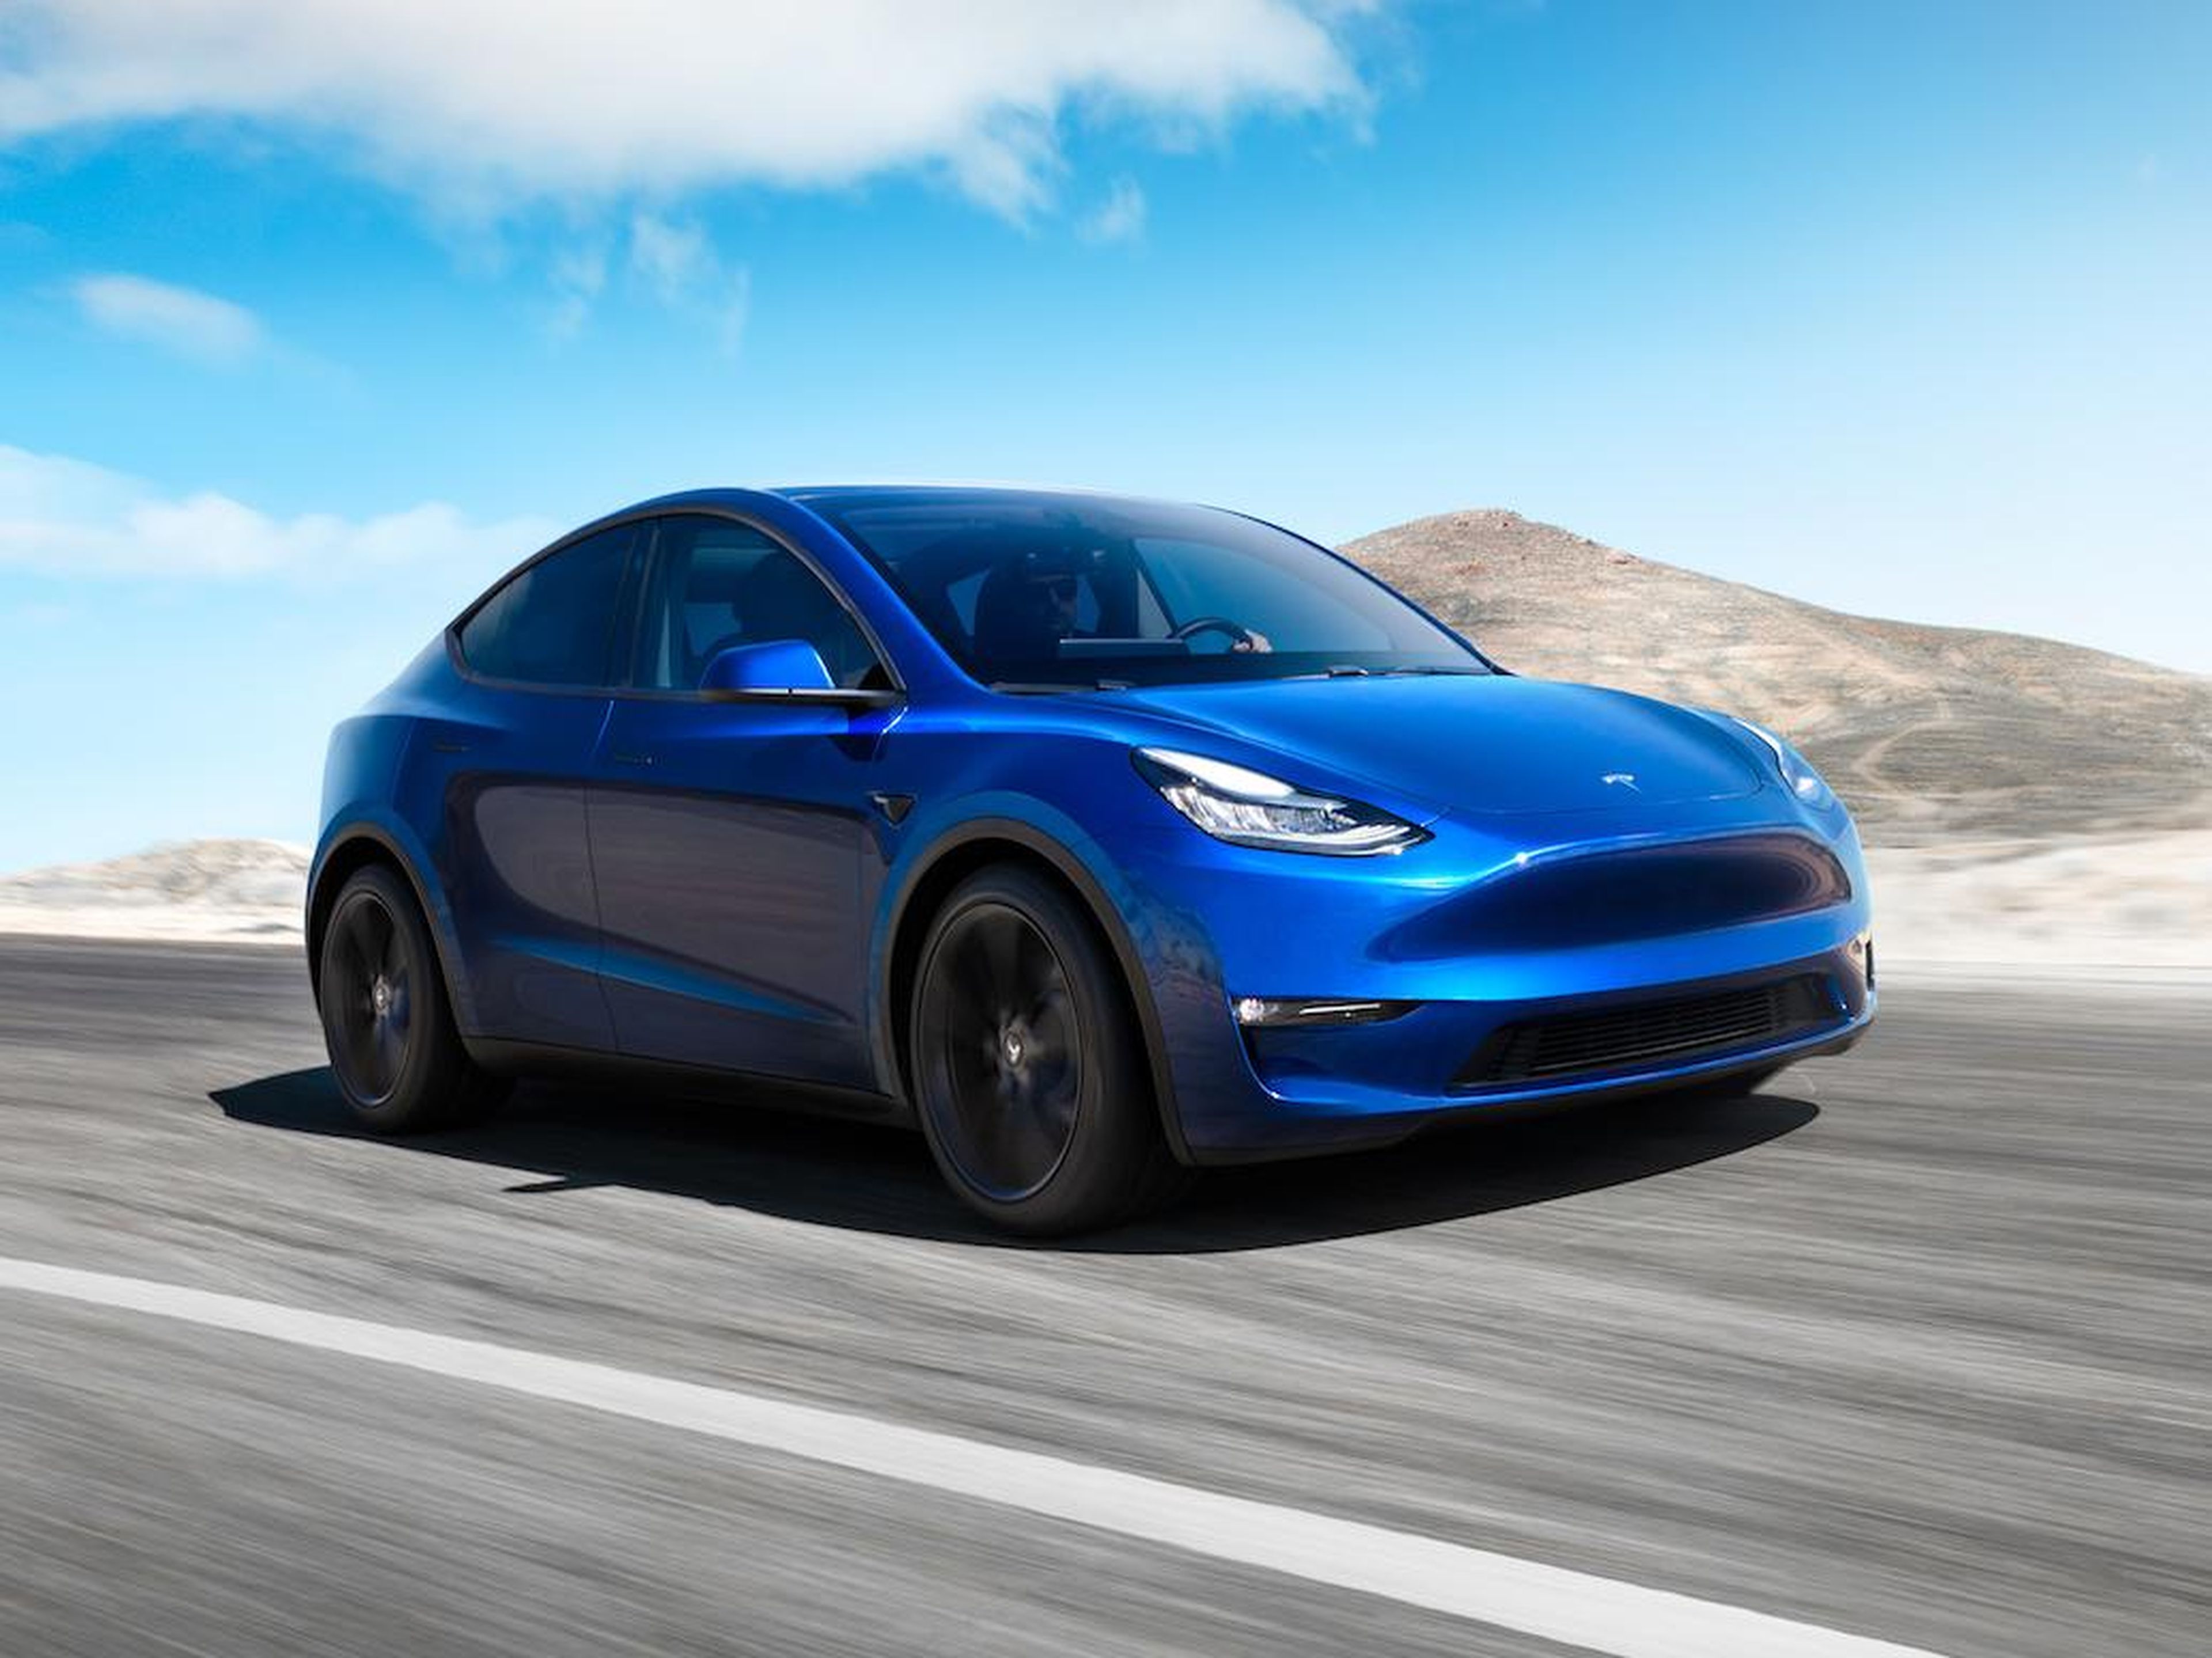 CEO Elon Musk said a $39,000 standard-range trim would arrive in 2021.